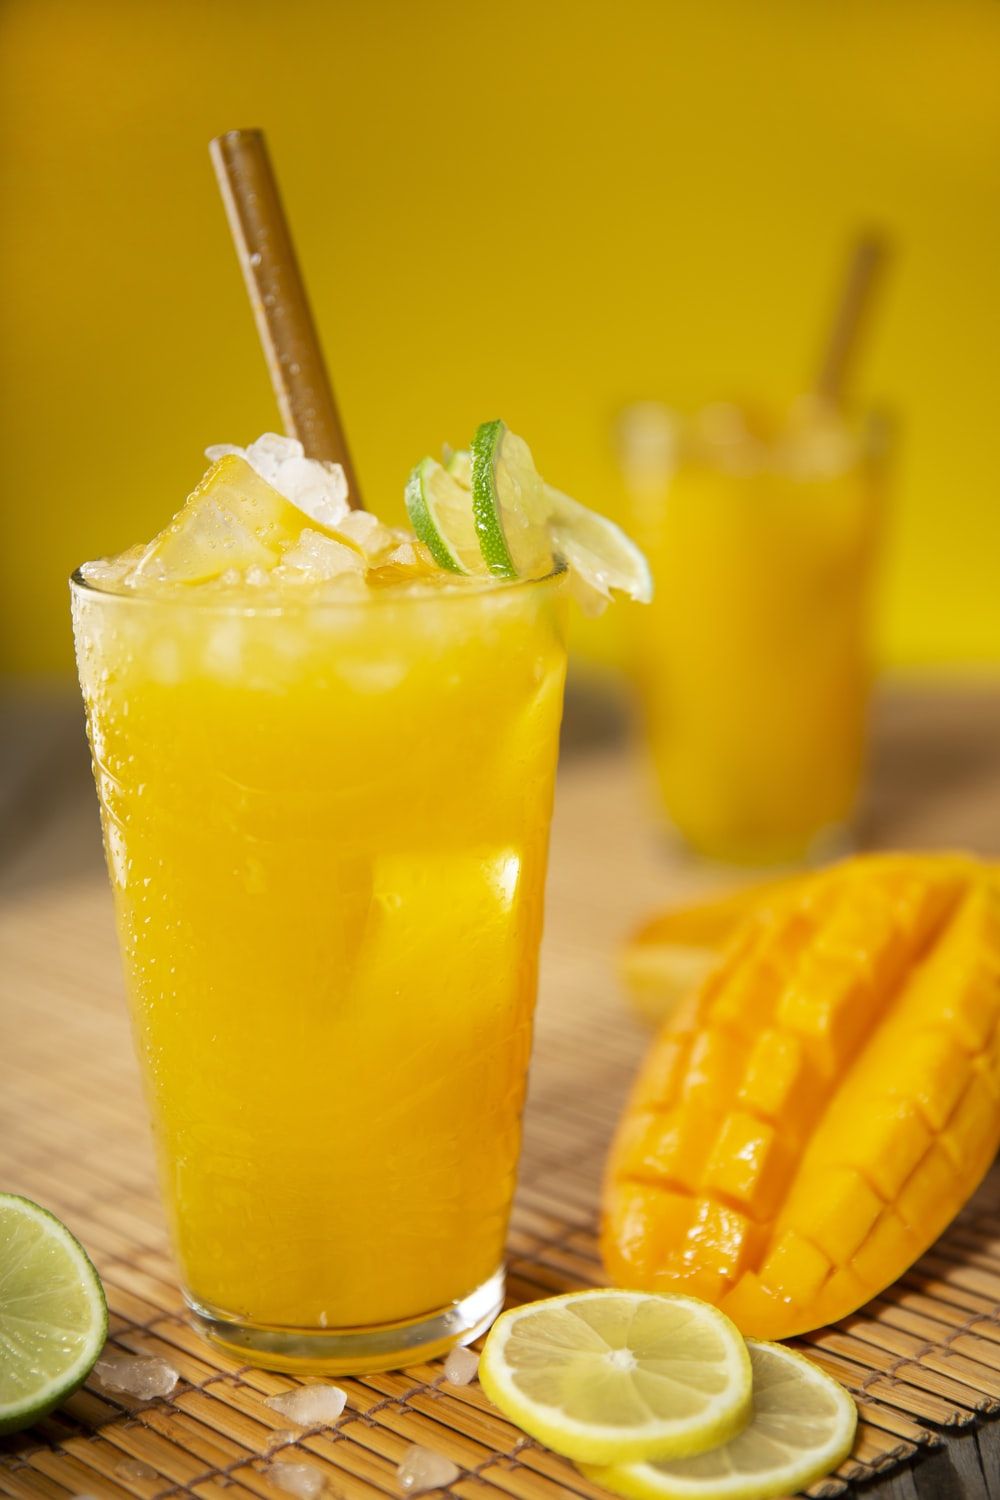 Mango Juice Picture. Download Free Image